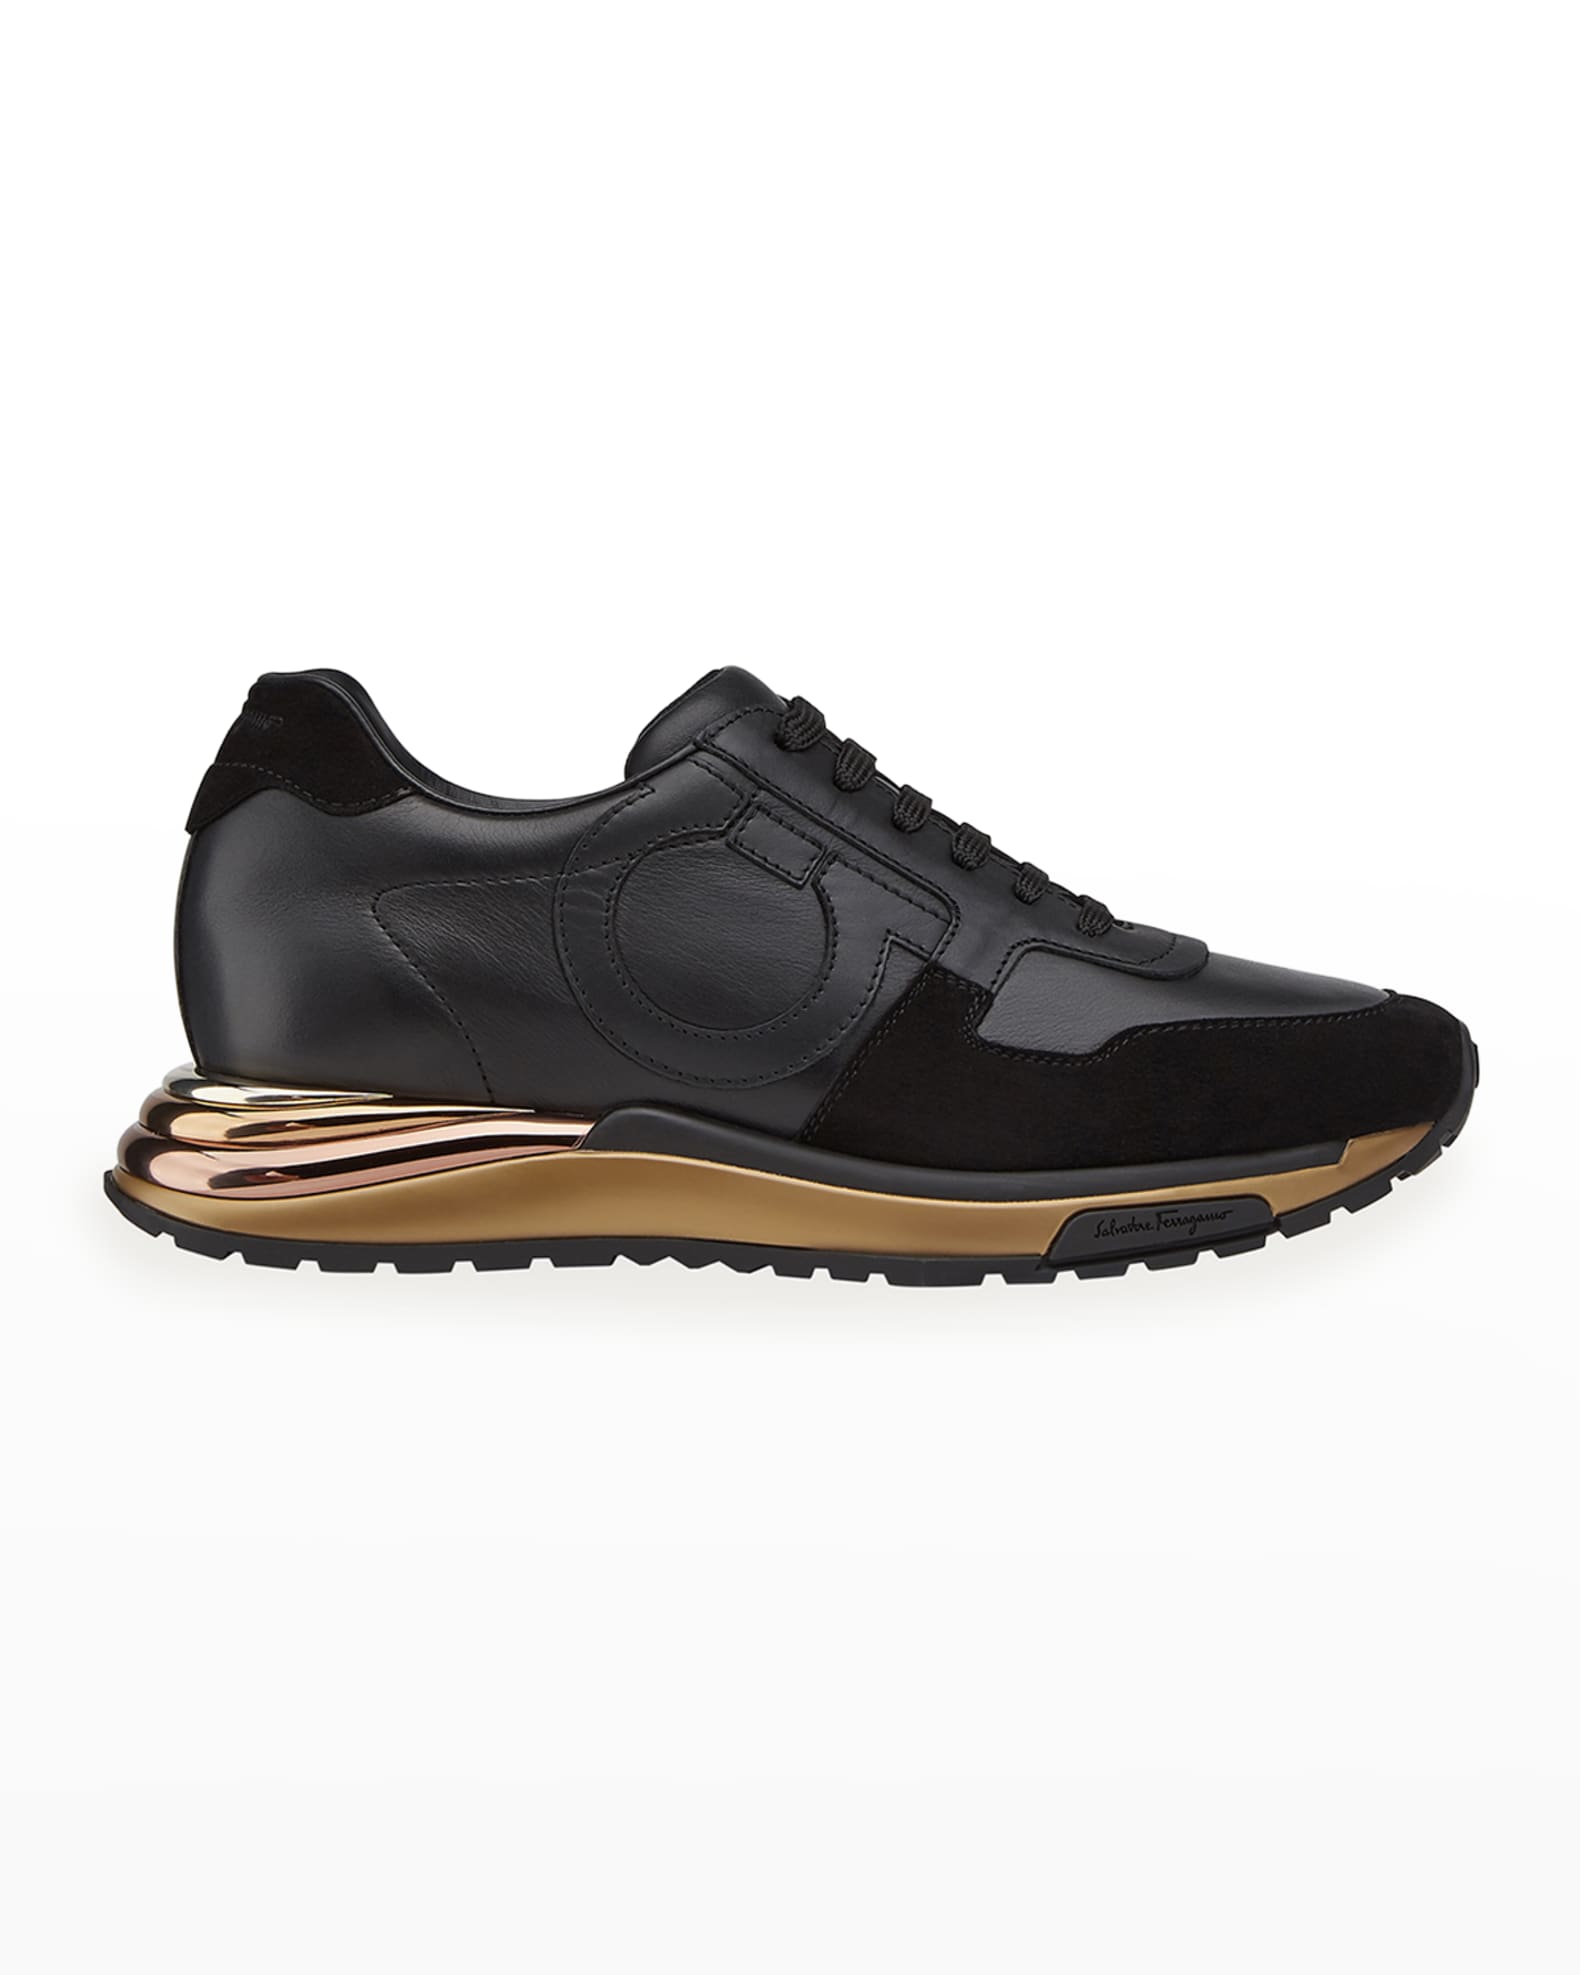 Salvatore Ferragamo Brooklyn Gancio Leather Sneakers | Neiman Marcus